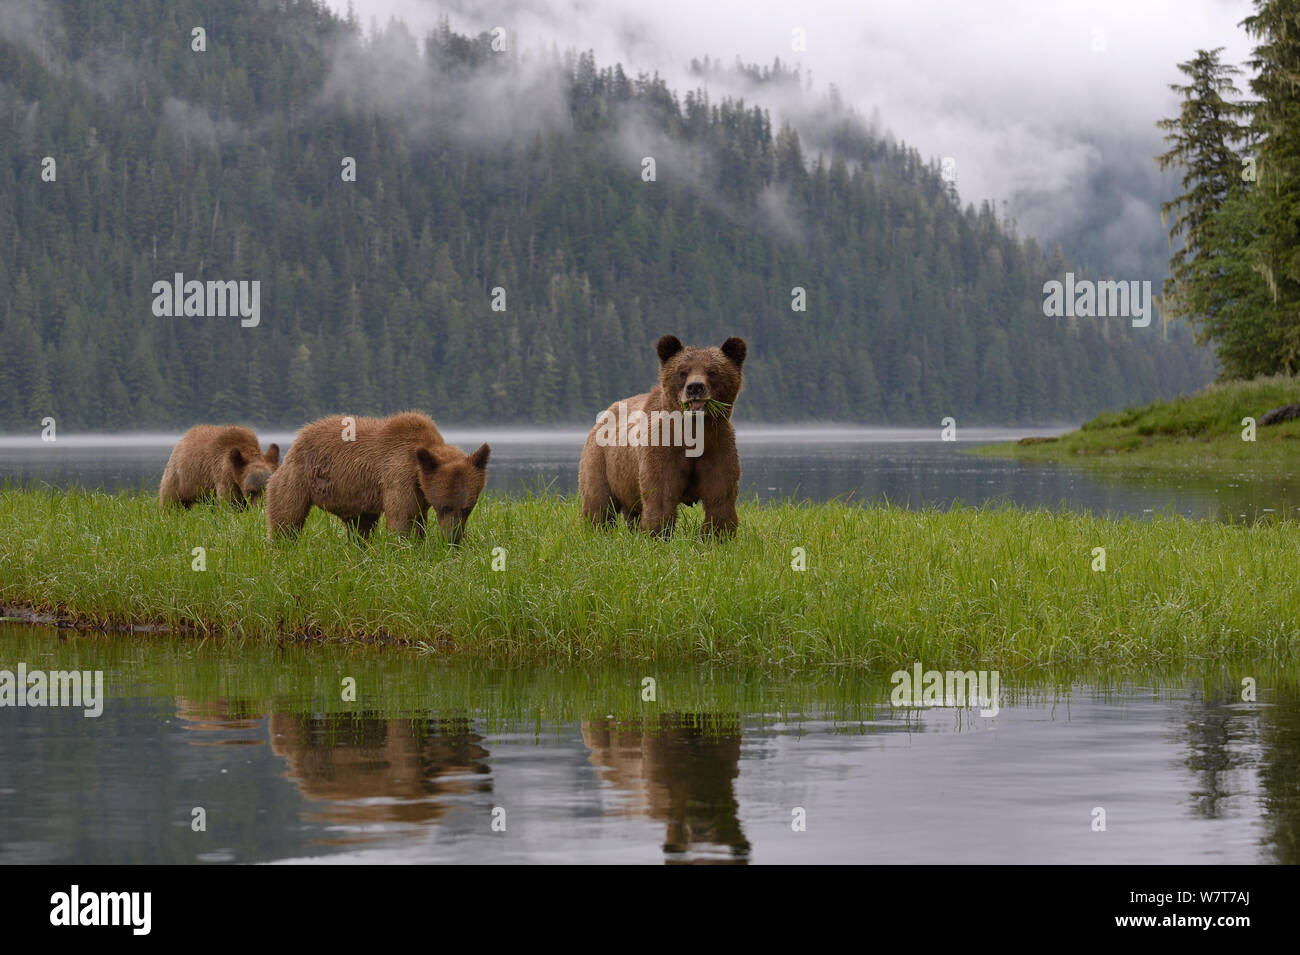 Femmina orso grizzly (Ursus arctos horribilis) con due lupetti, mangiare erba, Khutzeymateen Orso grizzly Santuario, British Columbia, Canada, a giugno. Foto Stock